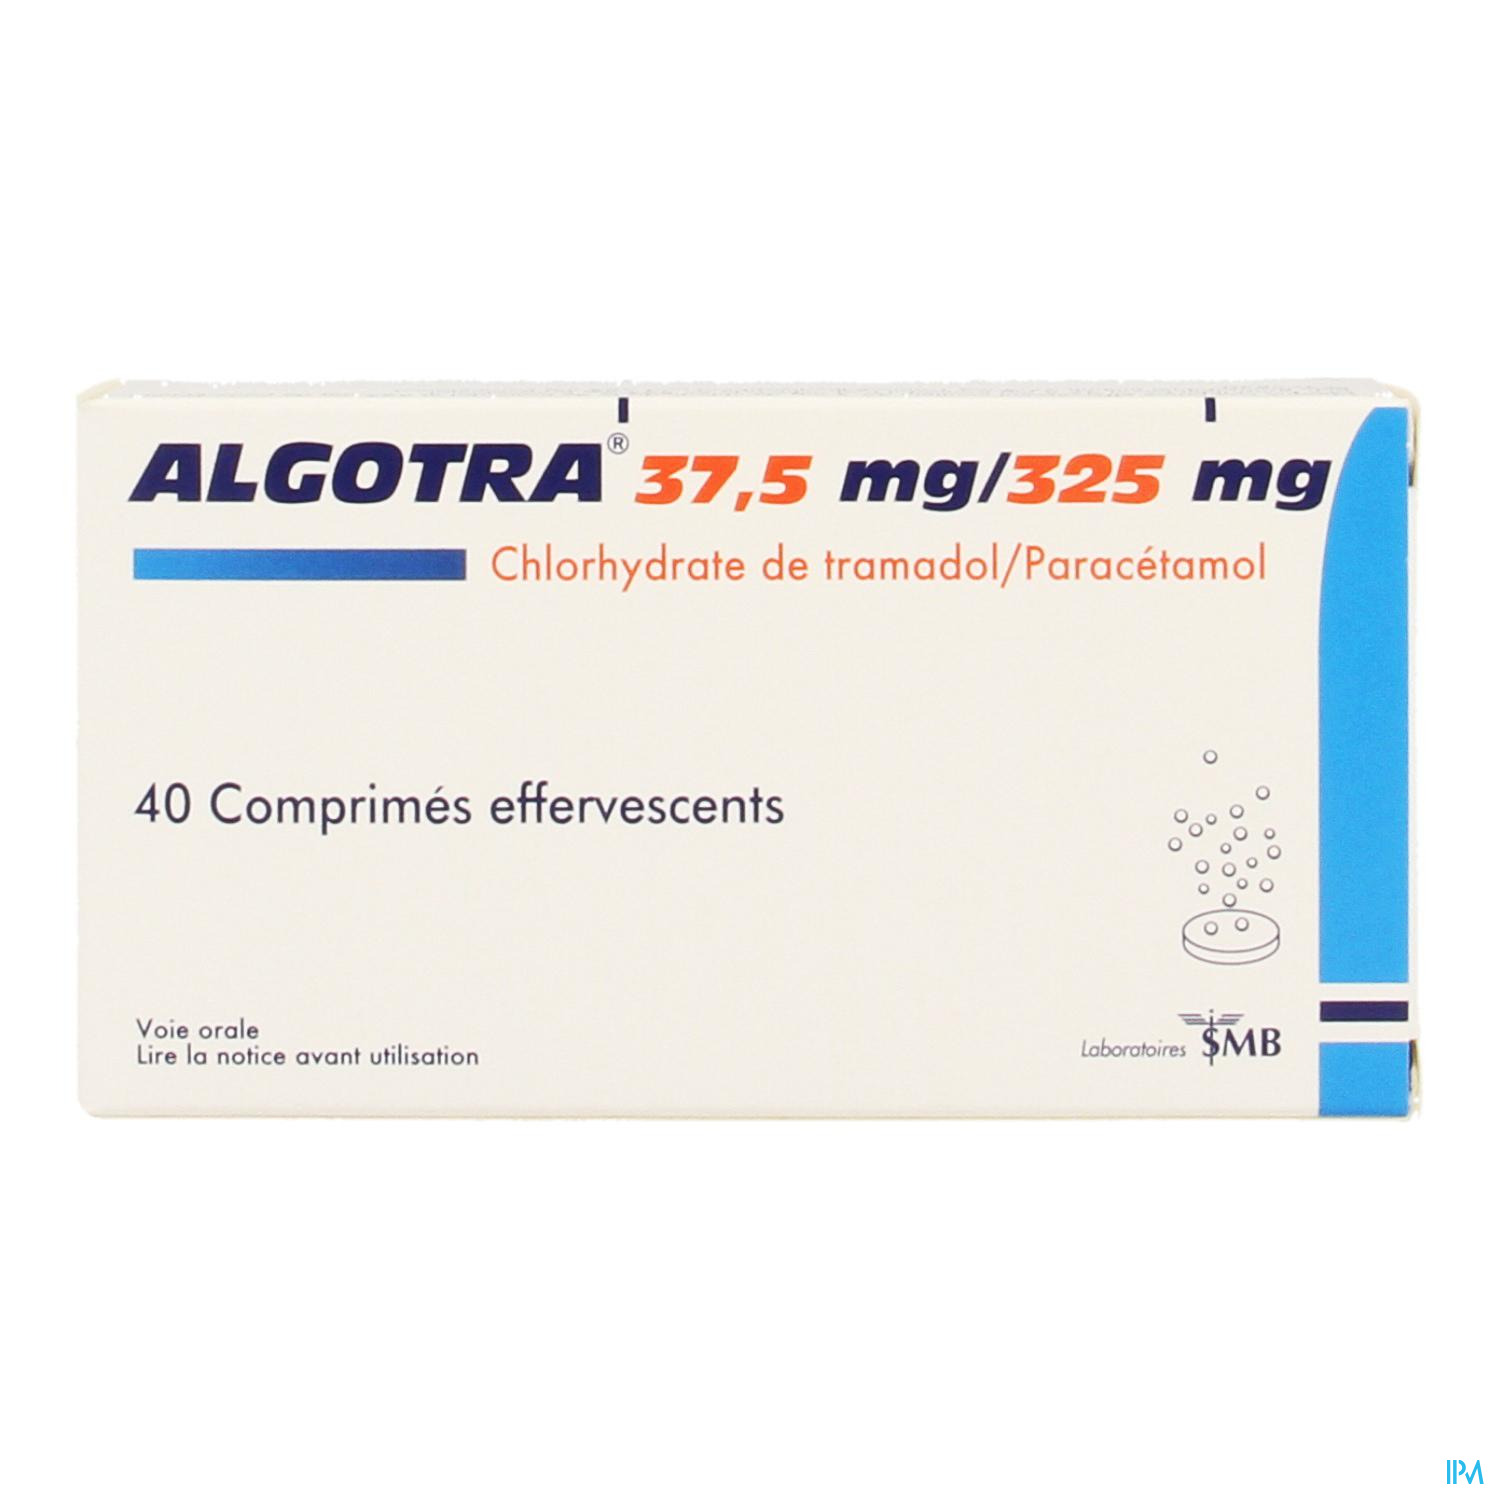 Algotra 37,5mg/325mg Bruistabletten 40